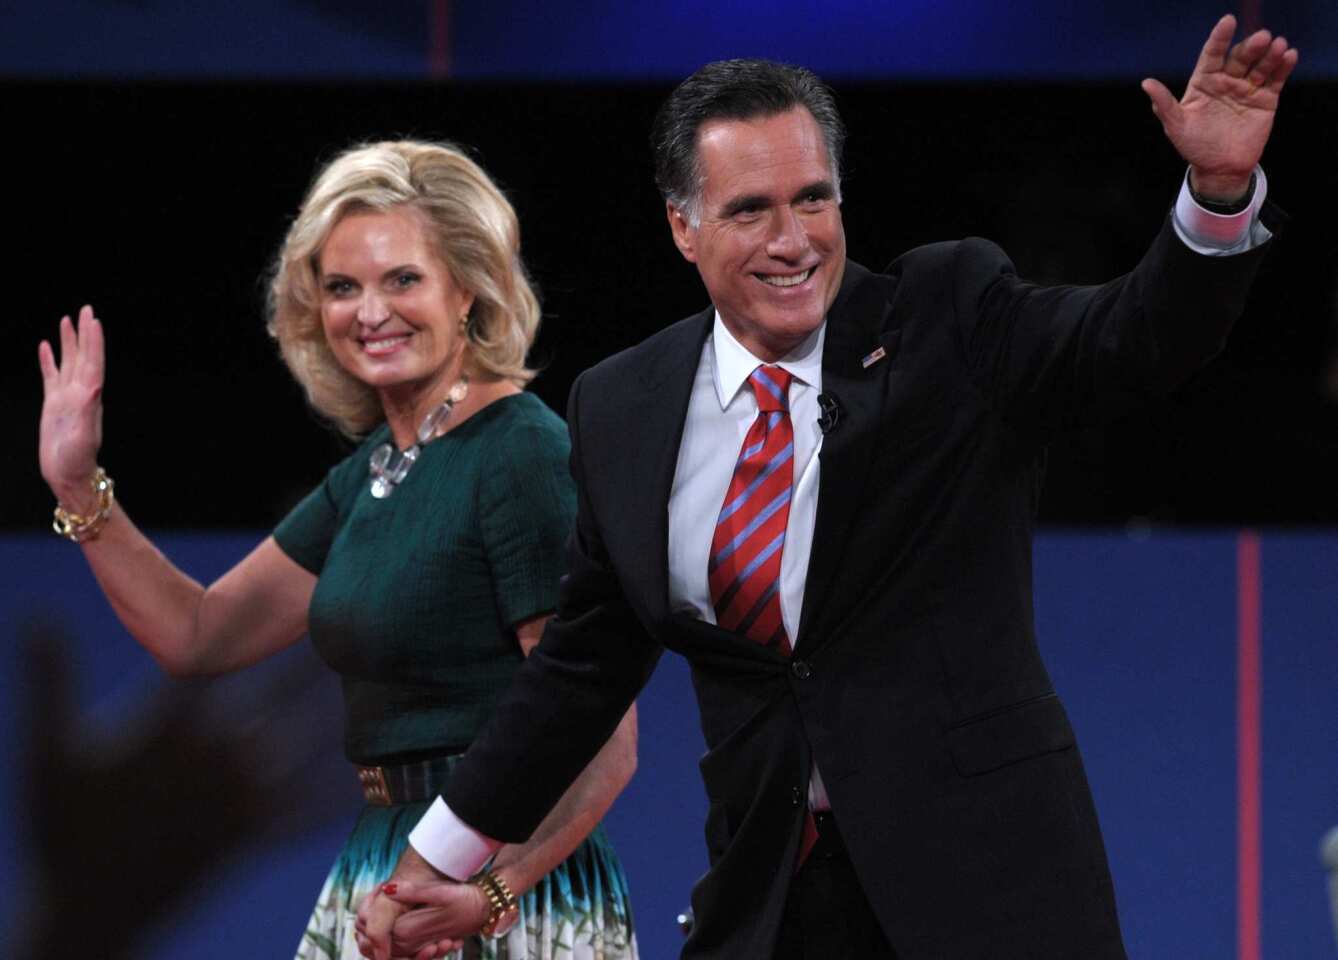 Ann and Mitt Romney